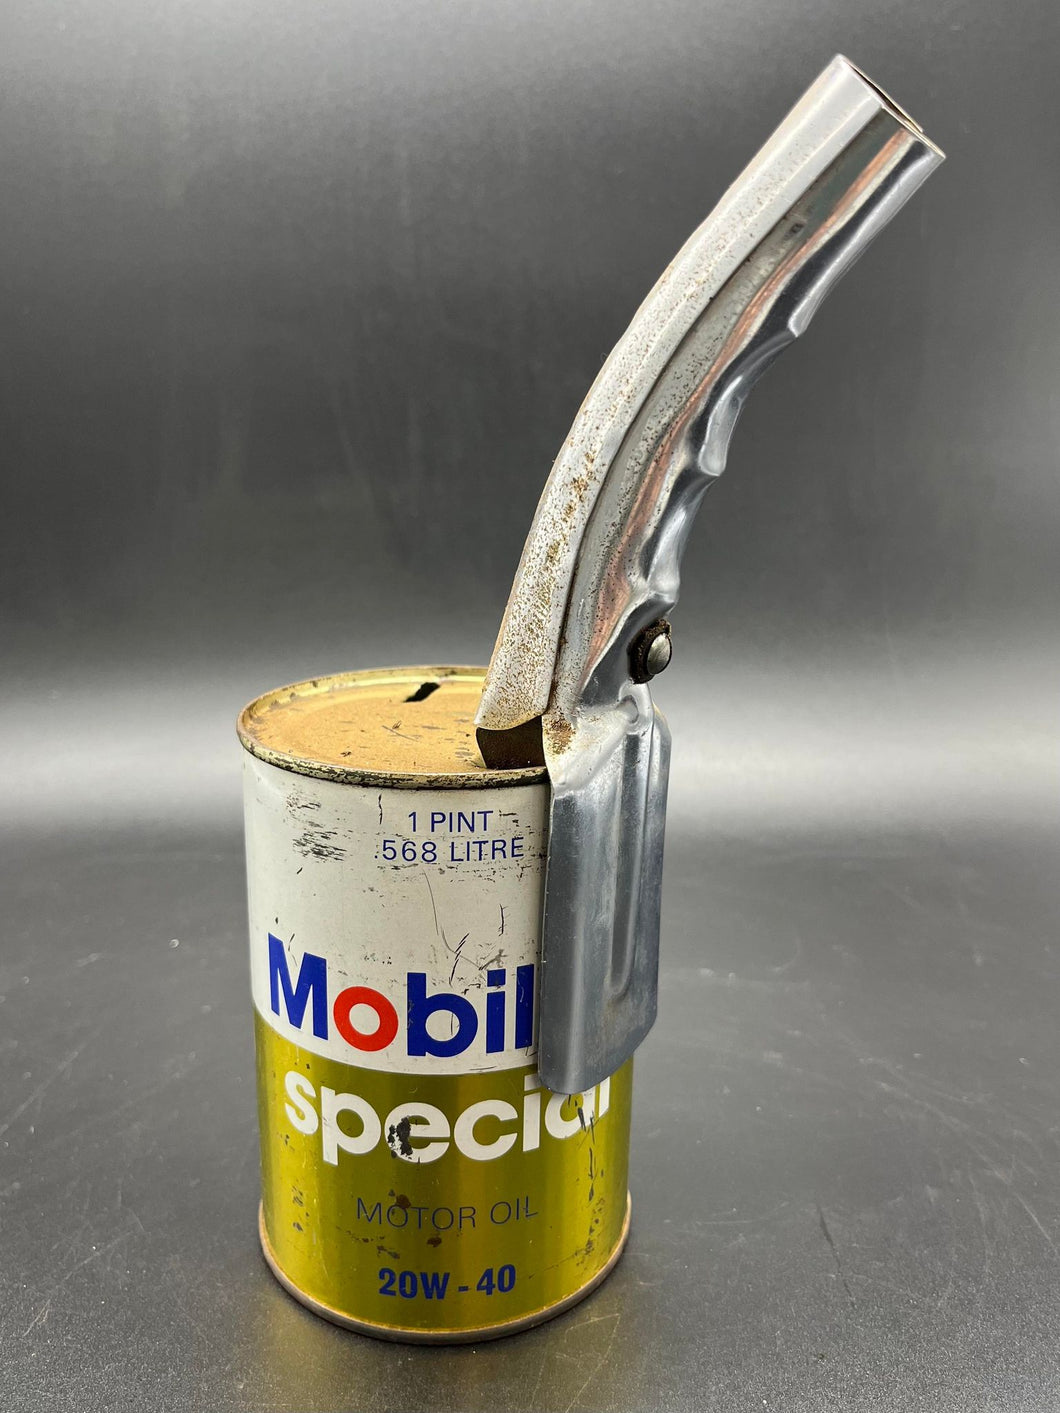 Vintage Mobiloil Special Motor Oil Tin - 1 Pint with Metal Pourer